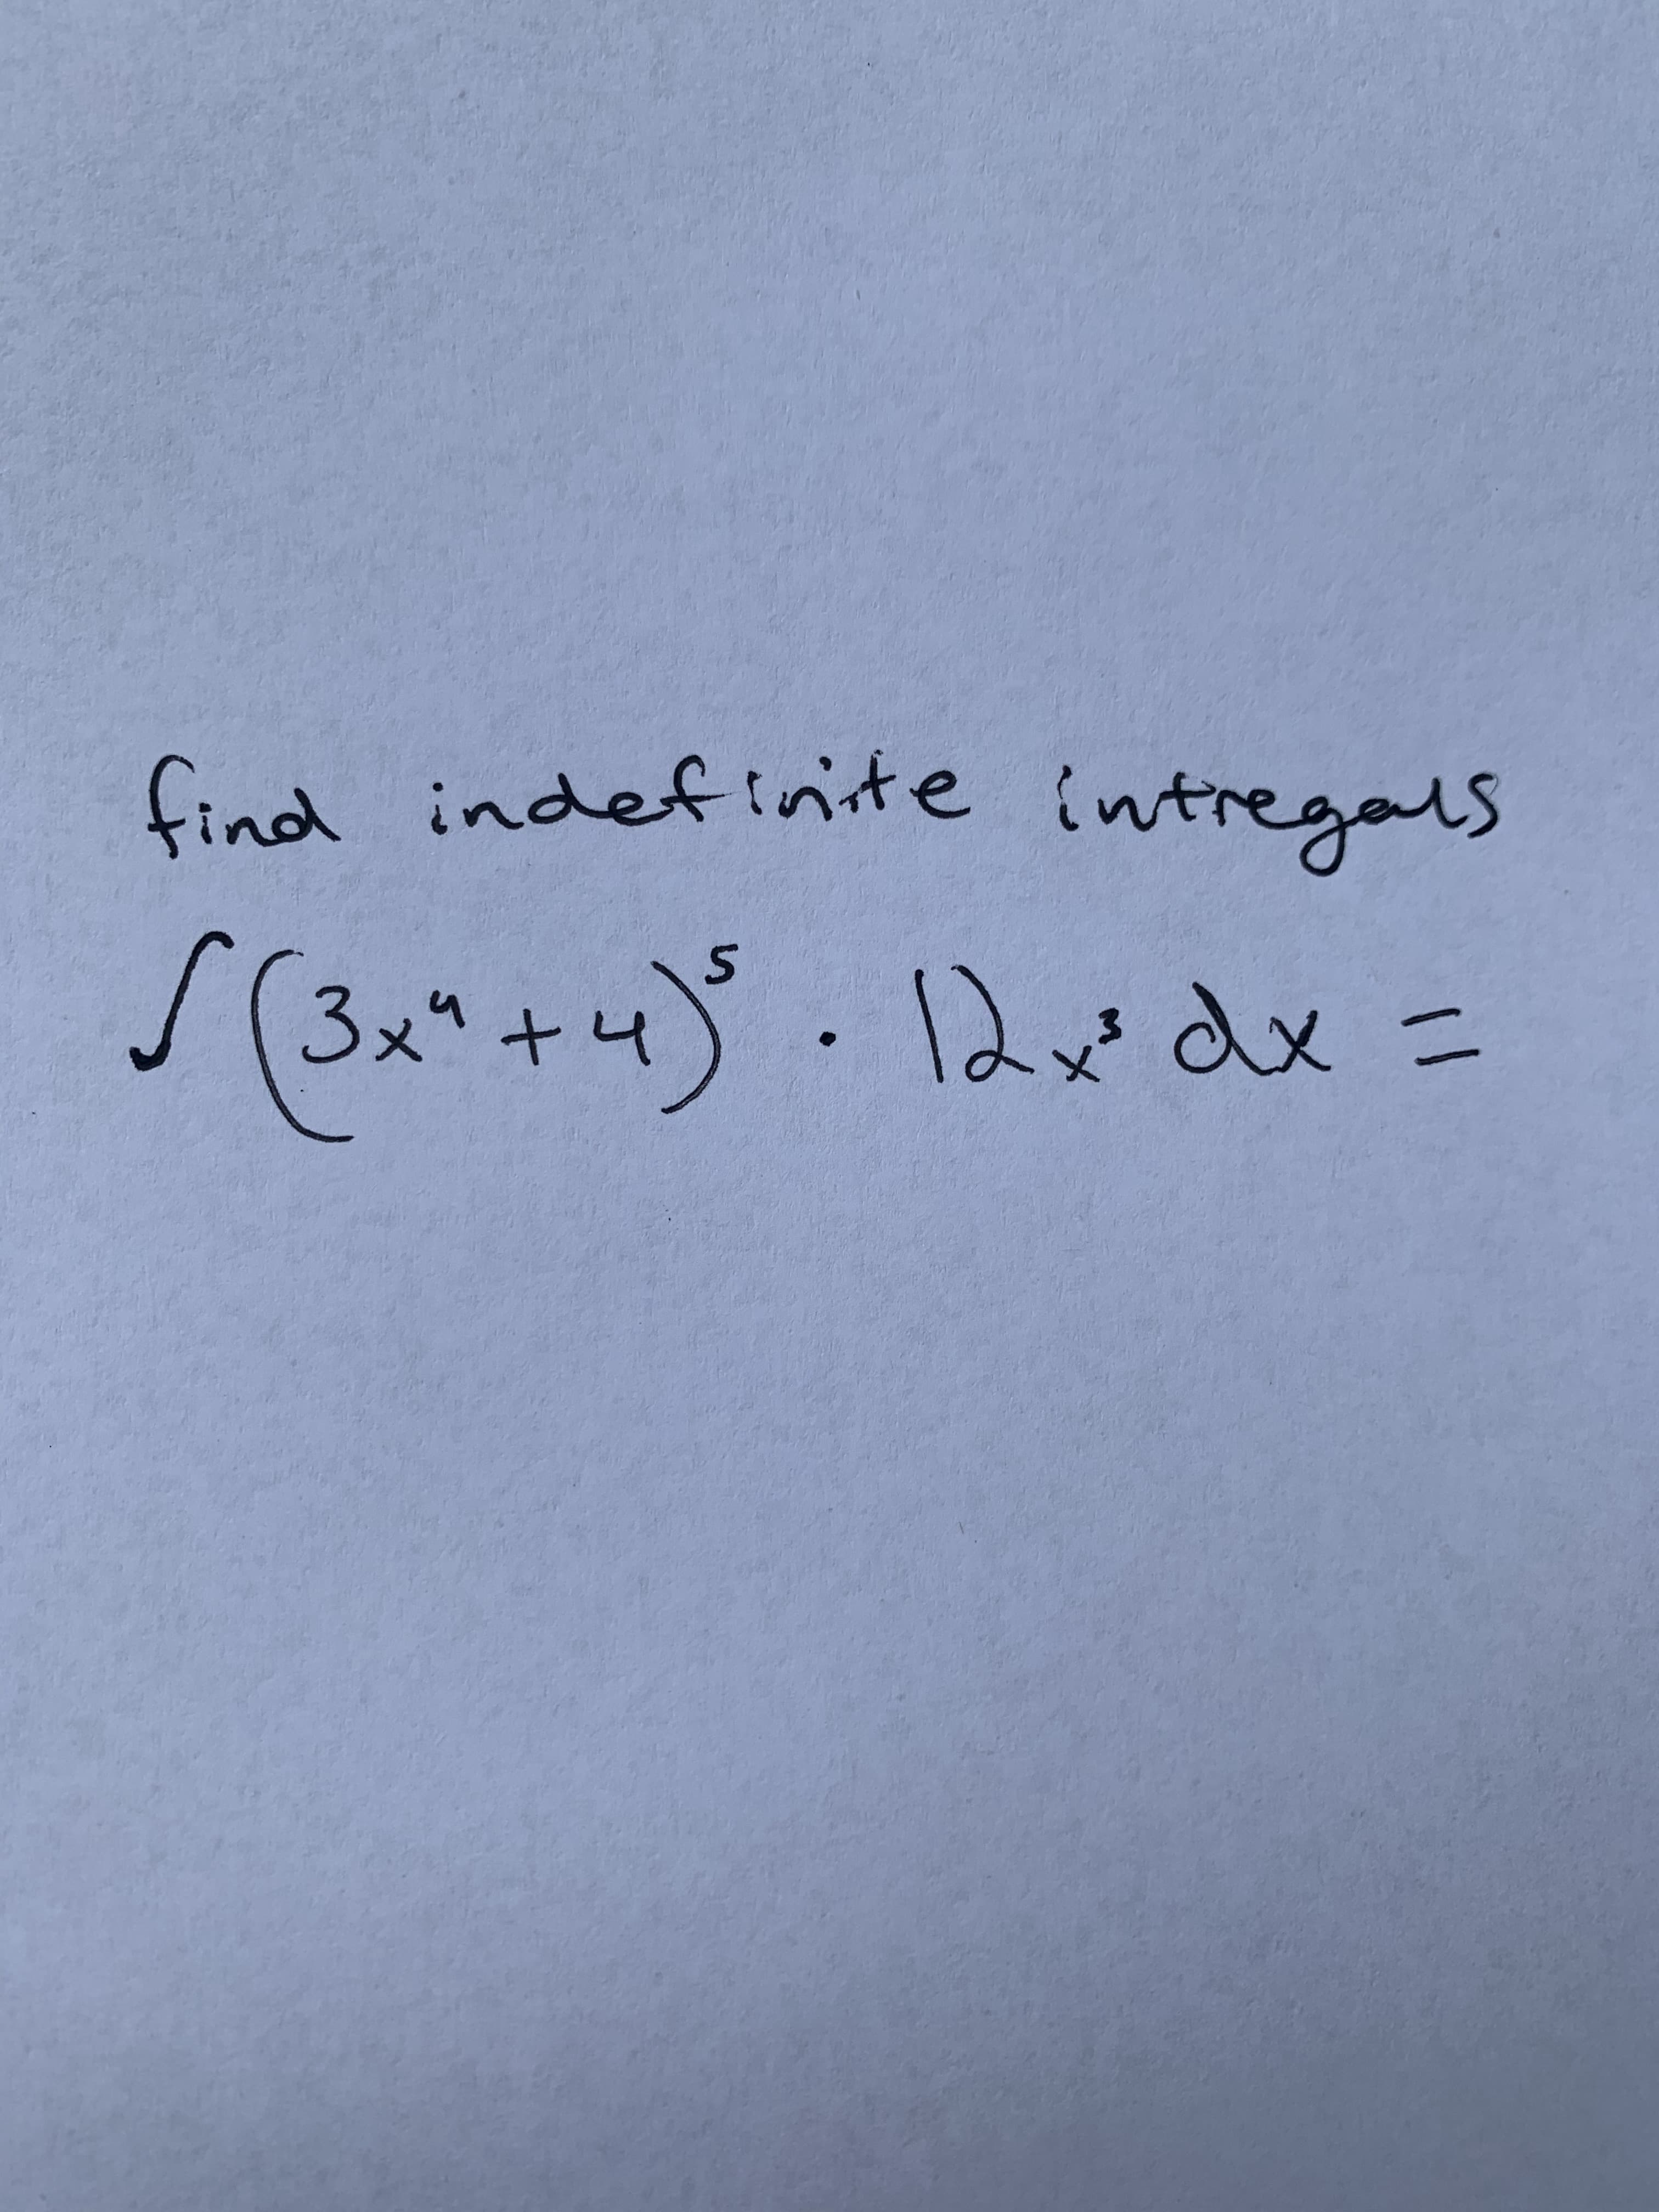 Gind indef!rite intregals
S(3" +4. 12 dx =
